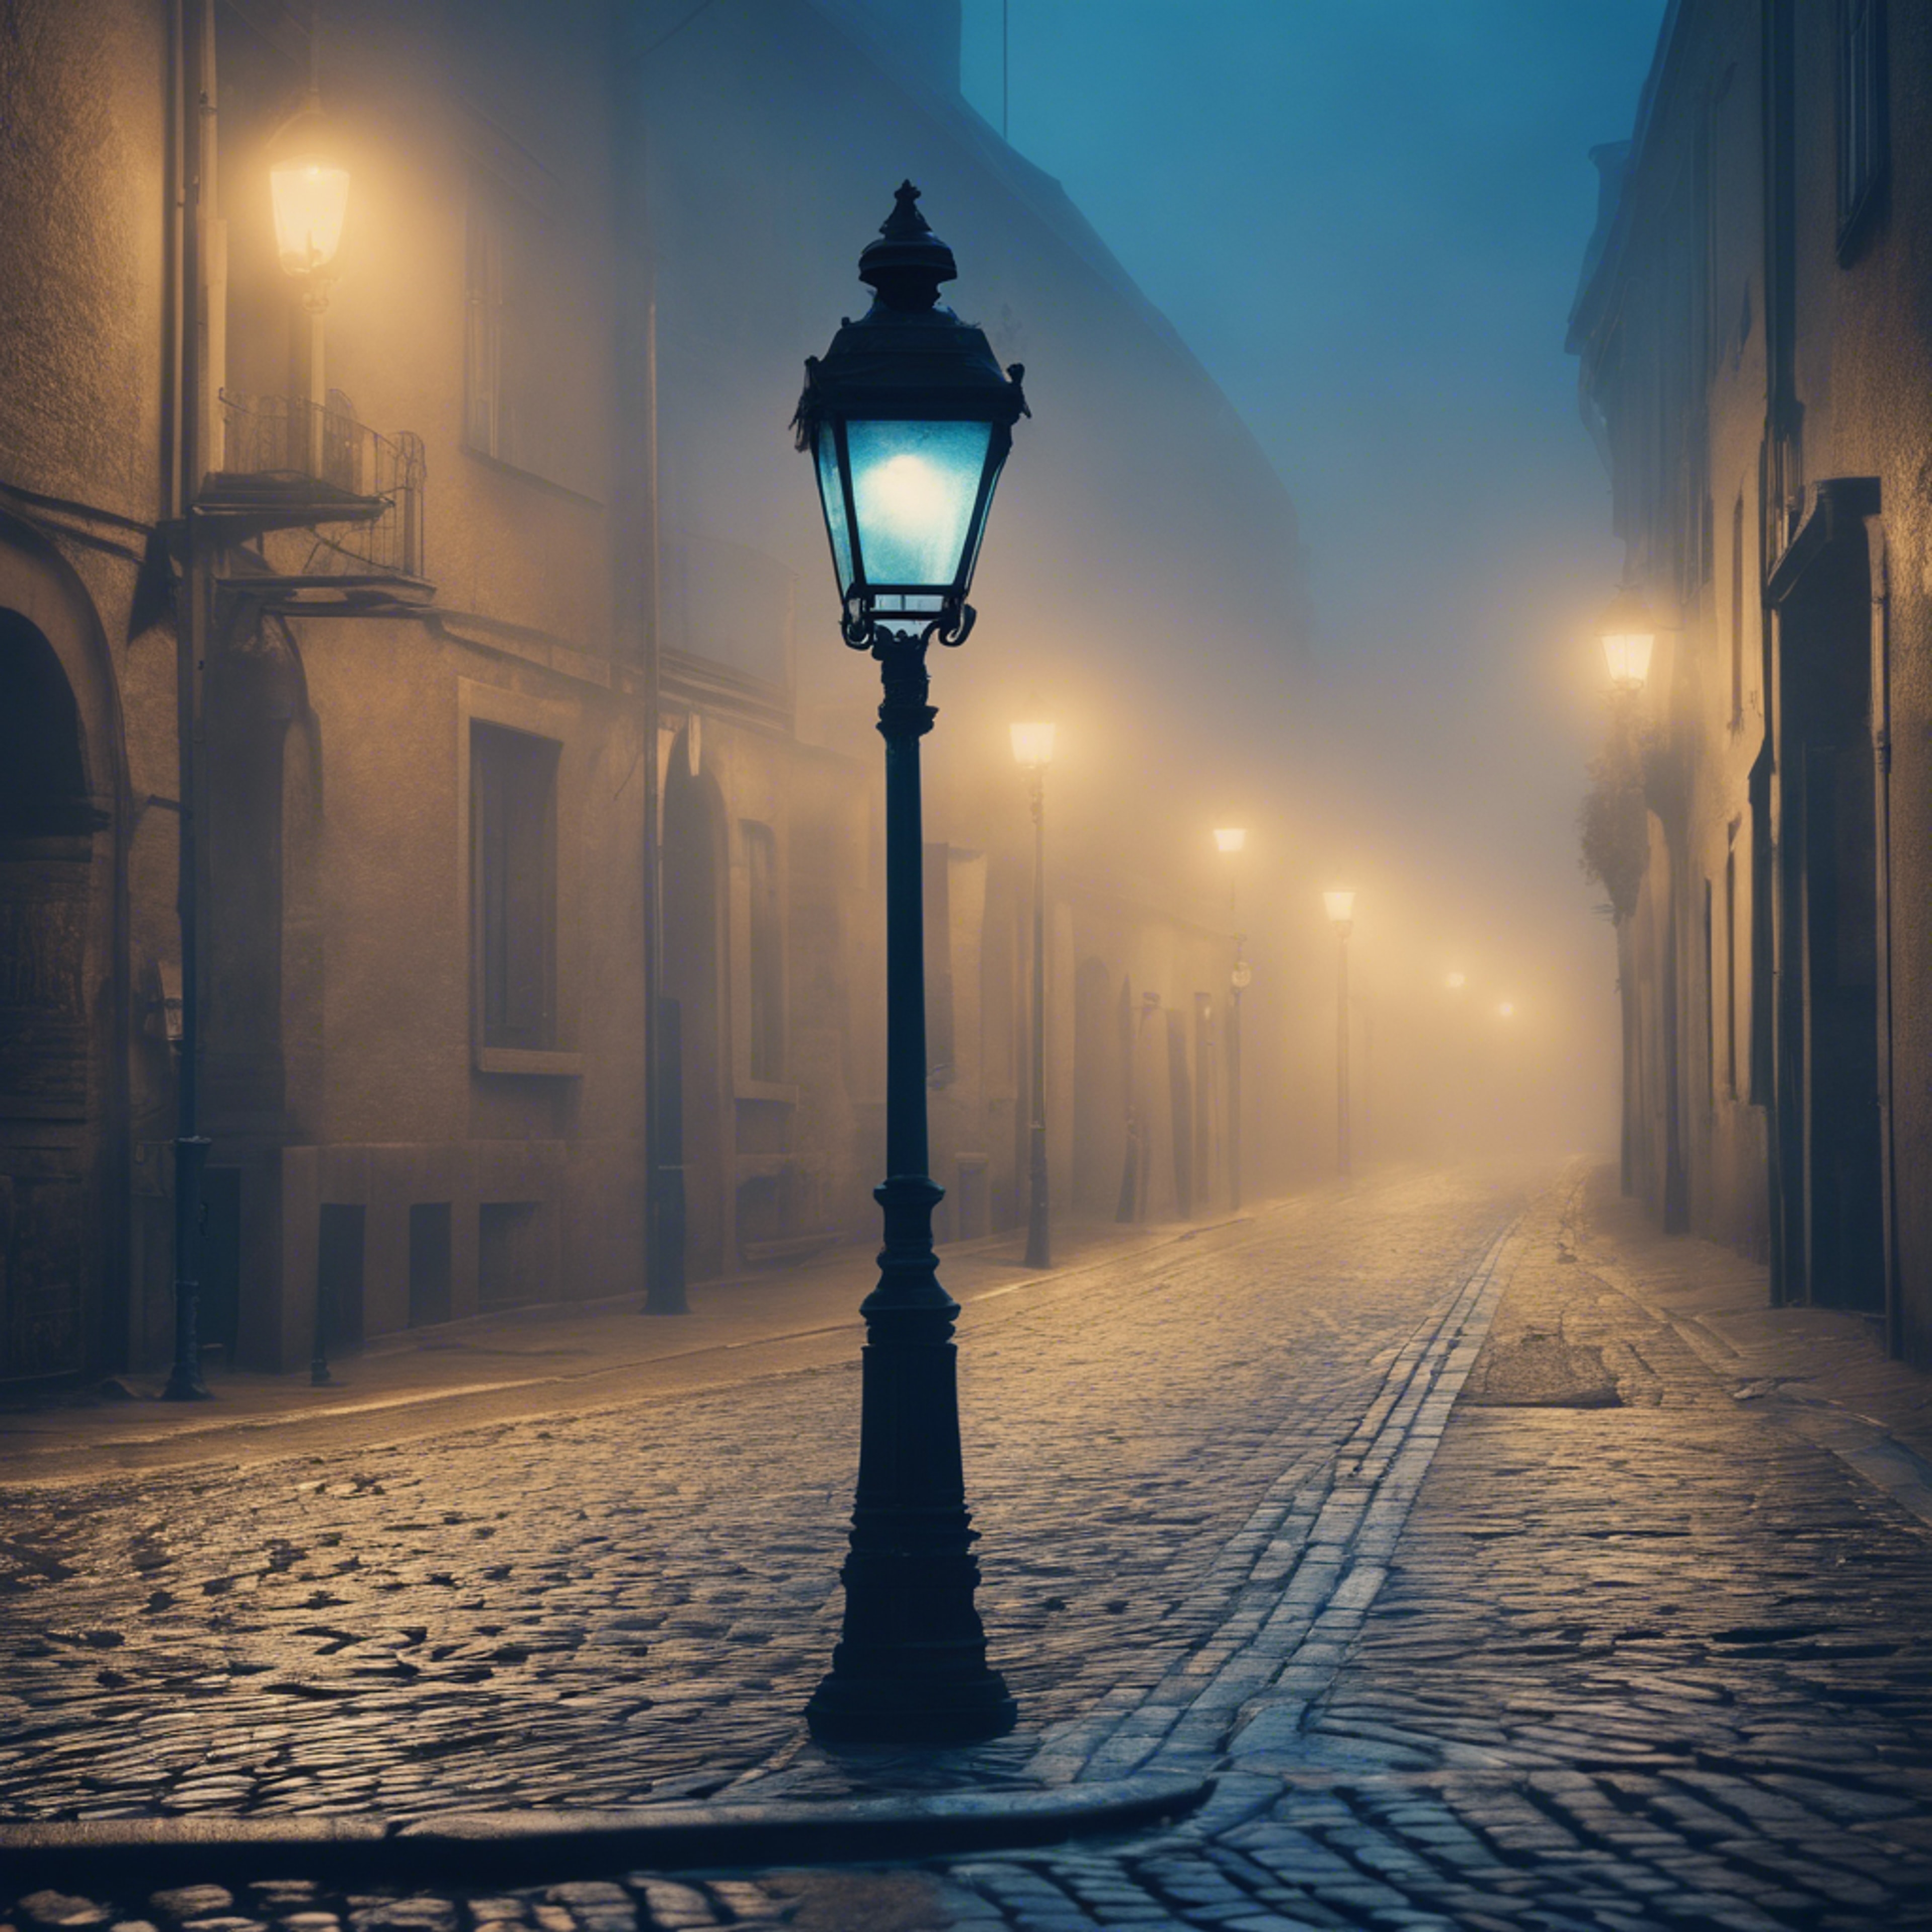 A foggy image of a cobblestone street lit by an old blue lamp post. Tapeta[86a8420f9b4d45a484bd]